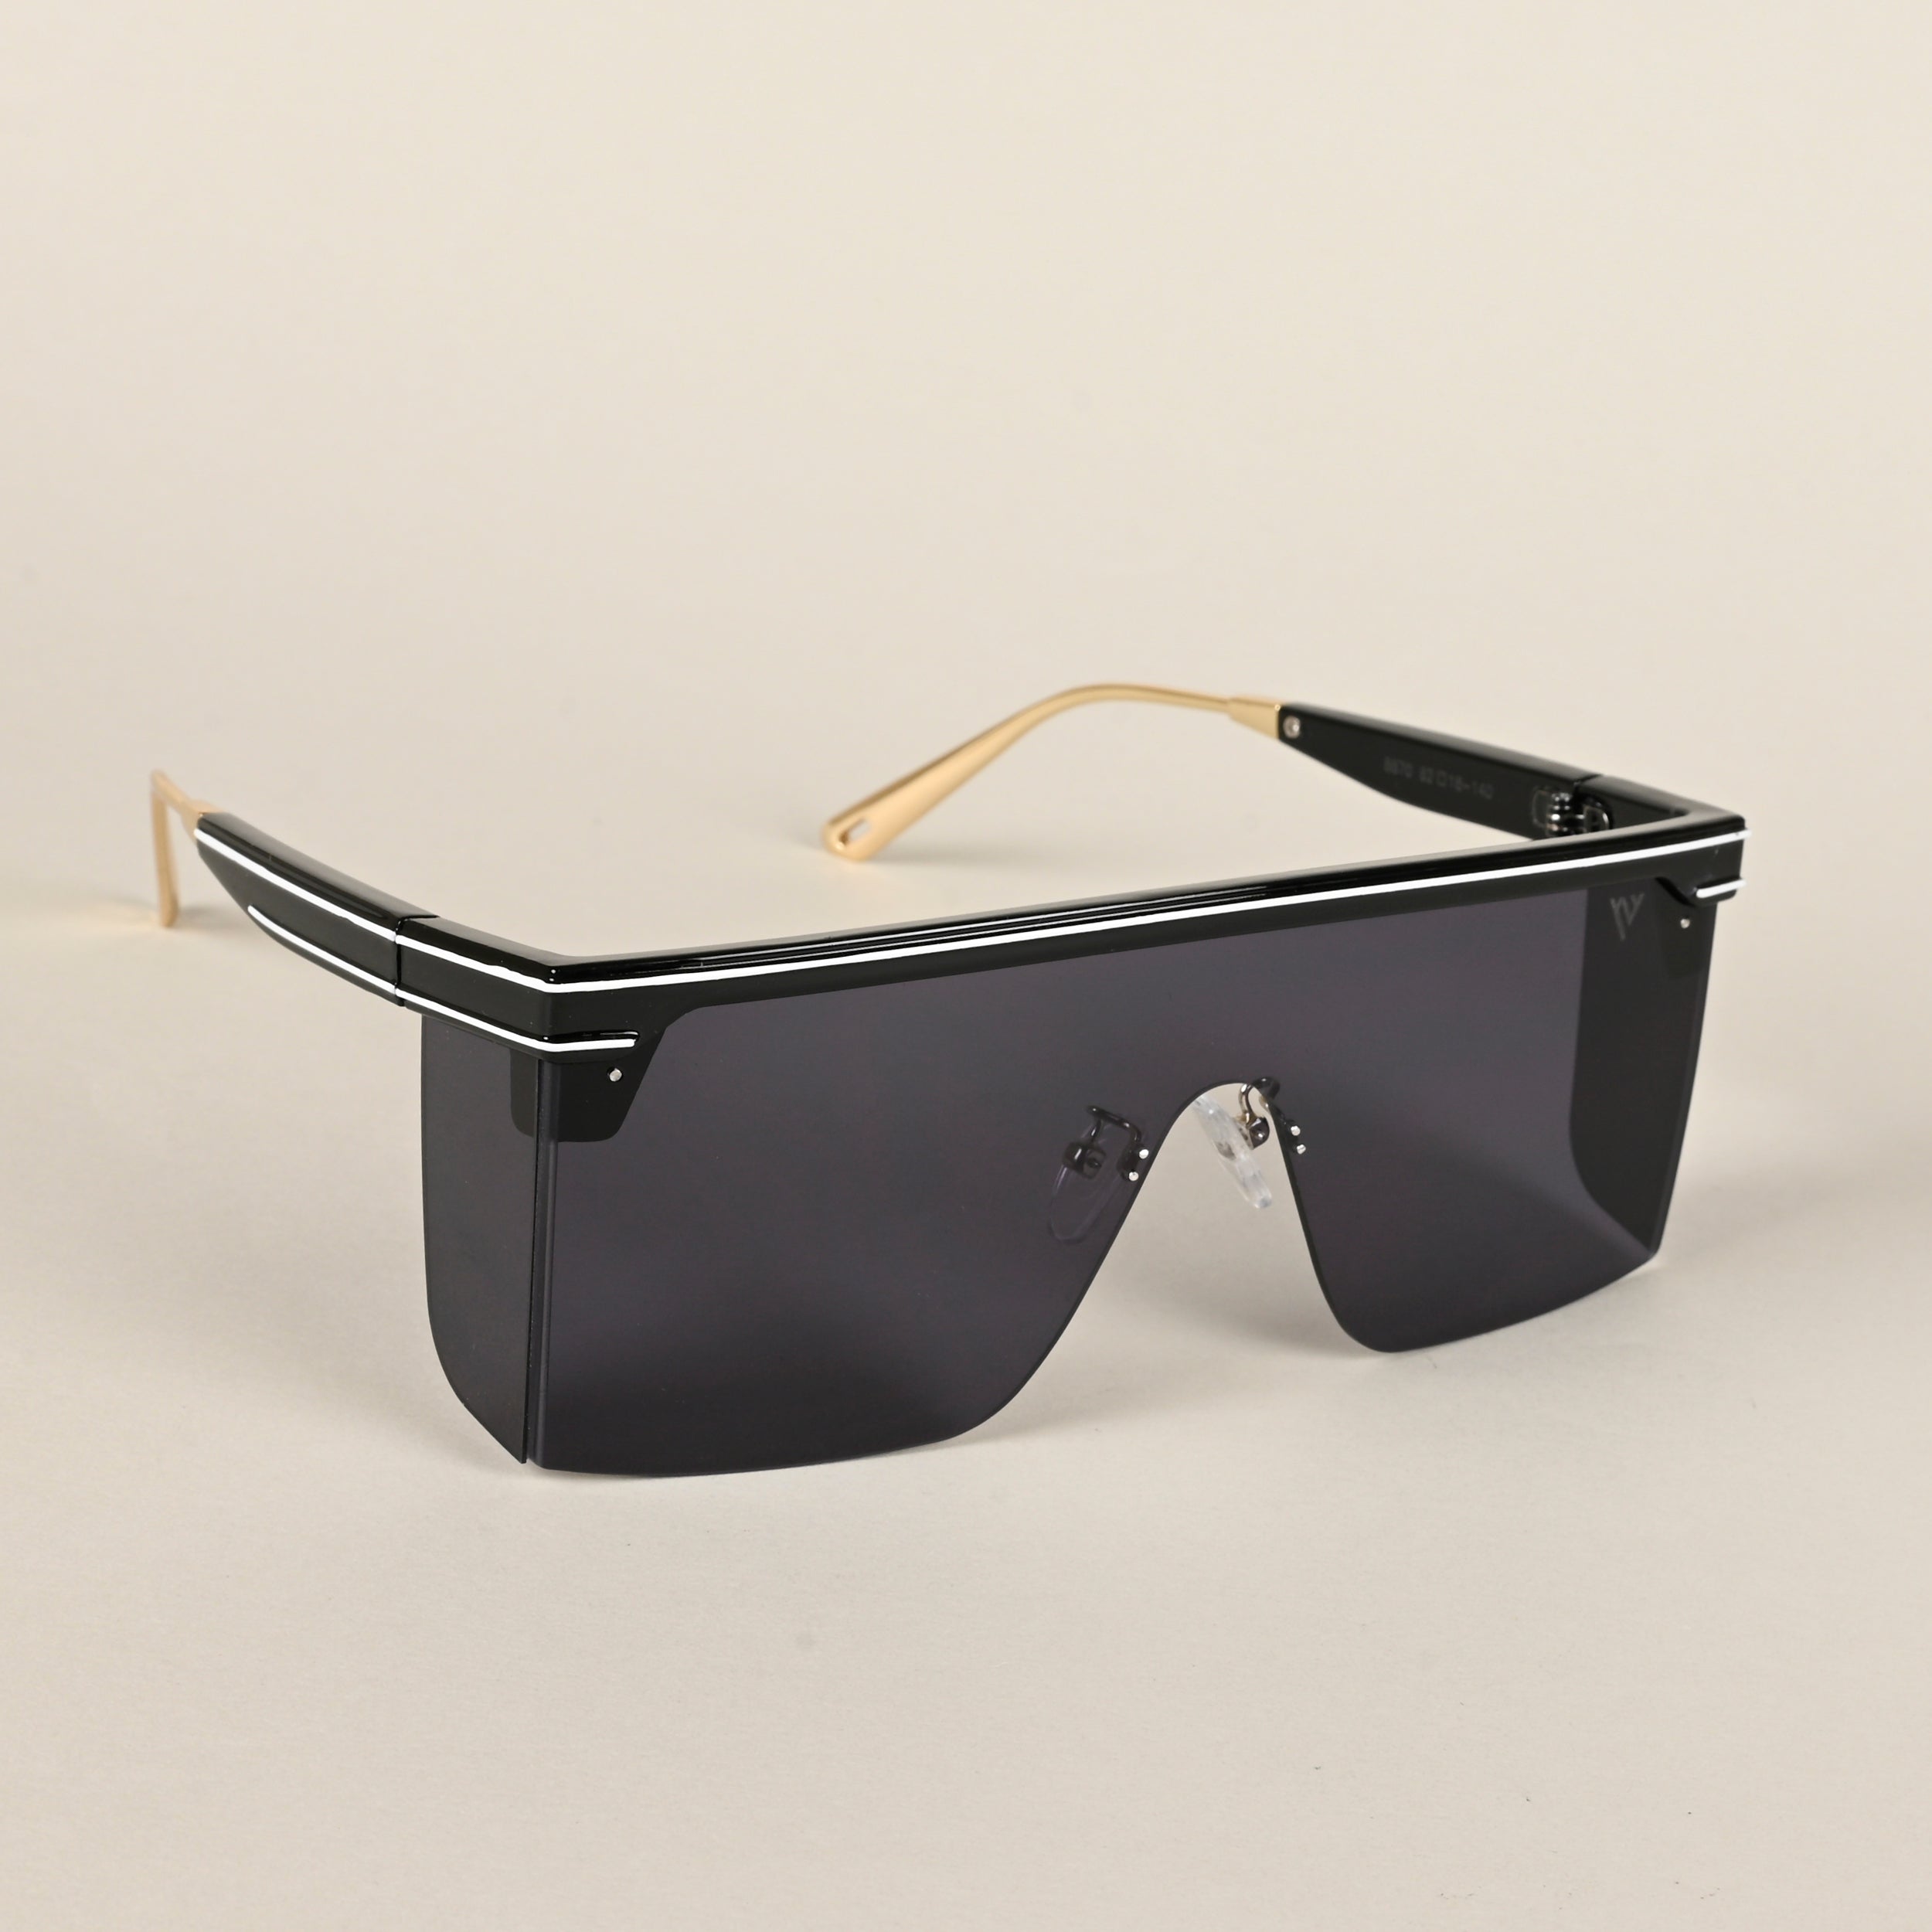 Voyage Black Wayfarer Sunglasses for Men & Women (8670MG4182)